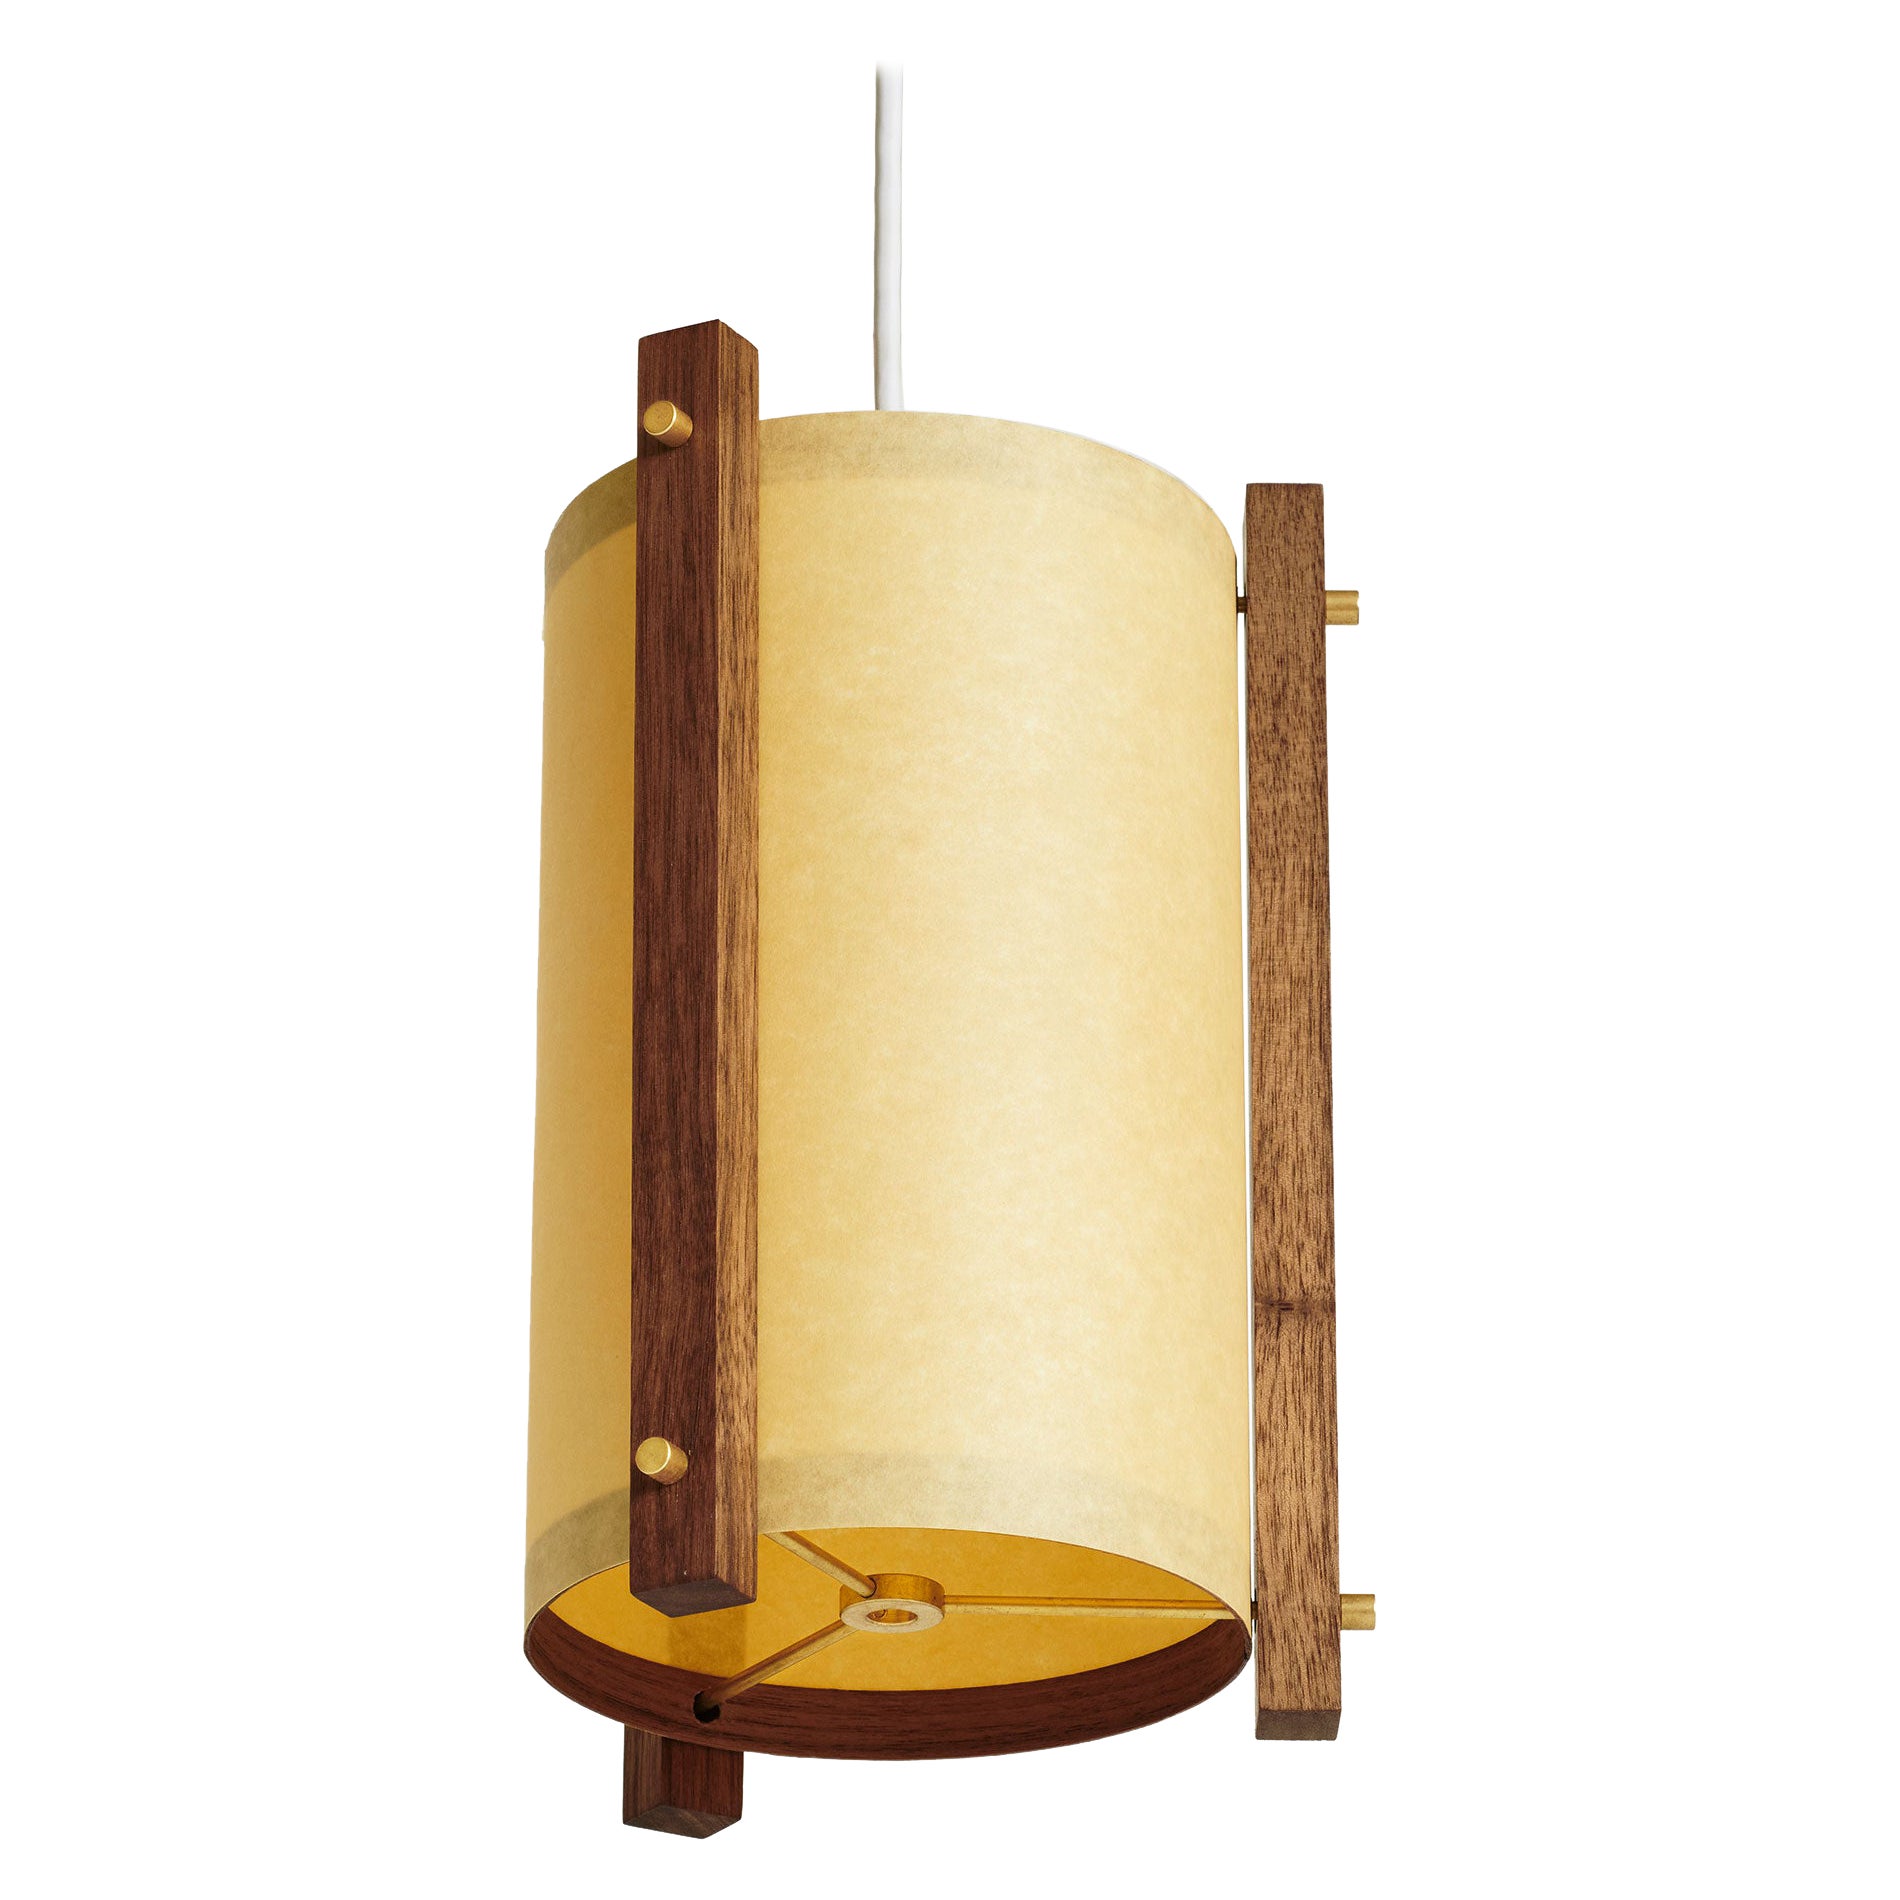 Japanese inspired mid-century Walnut and Brass pendant lamp - small